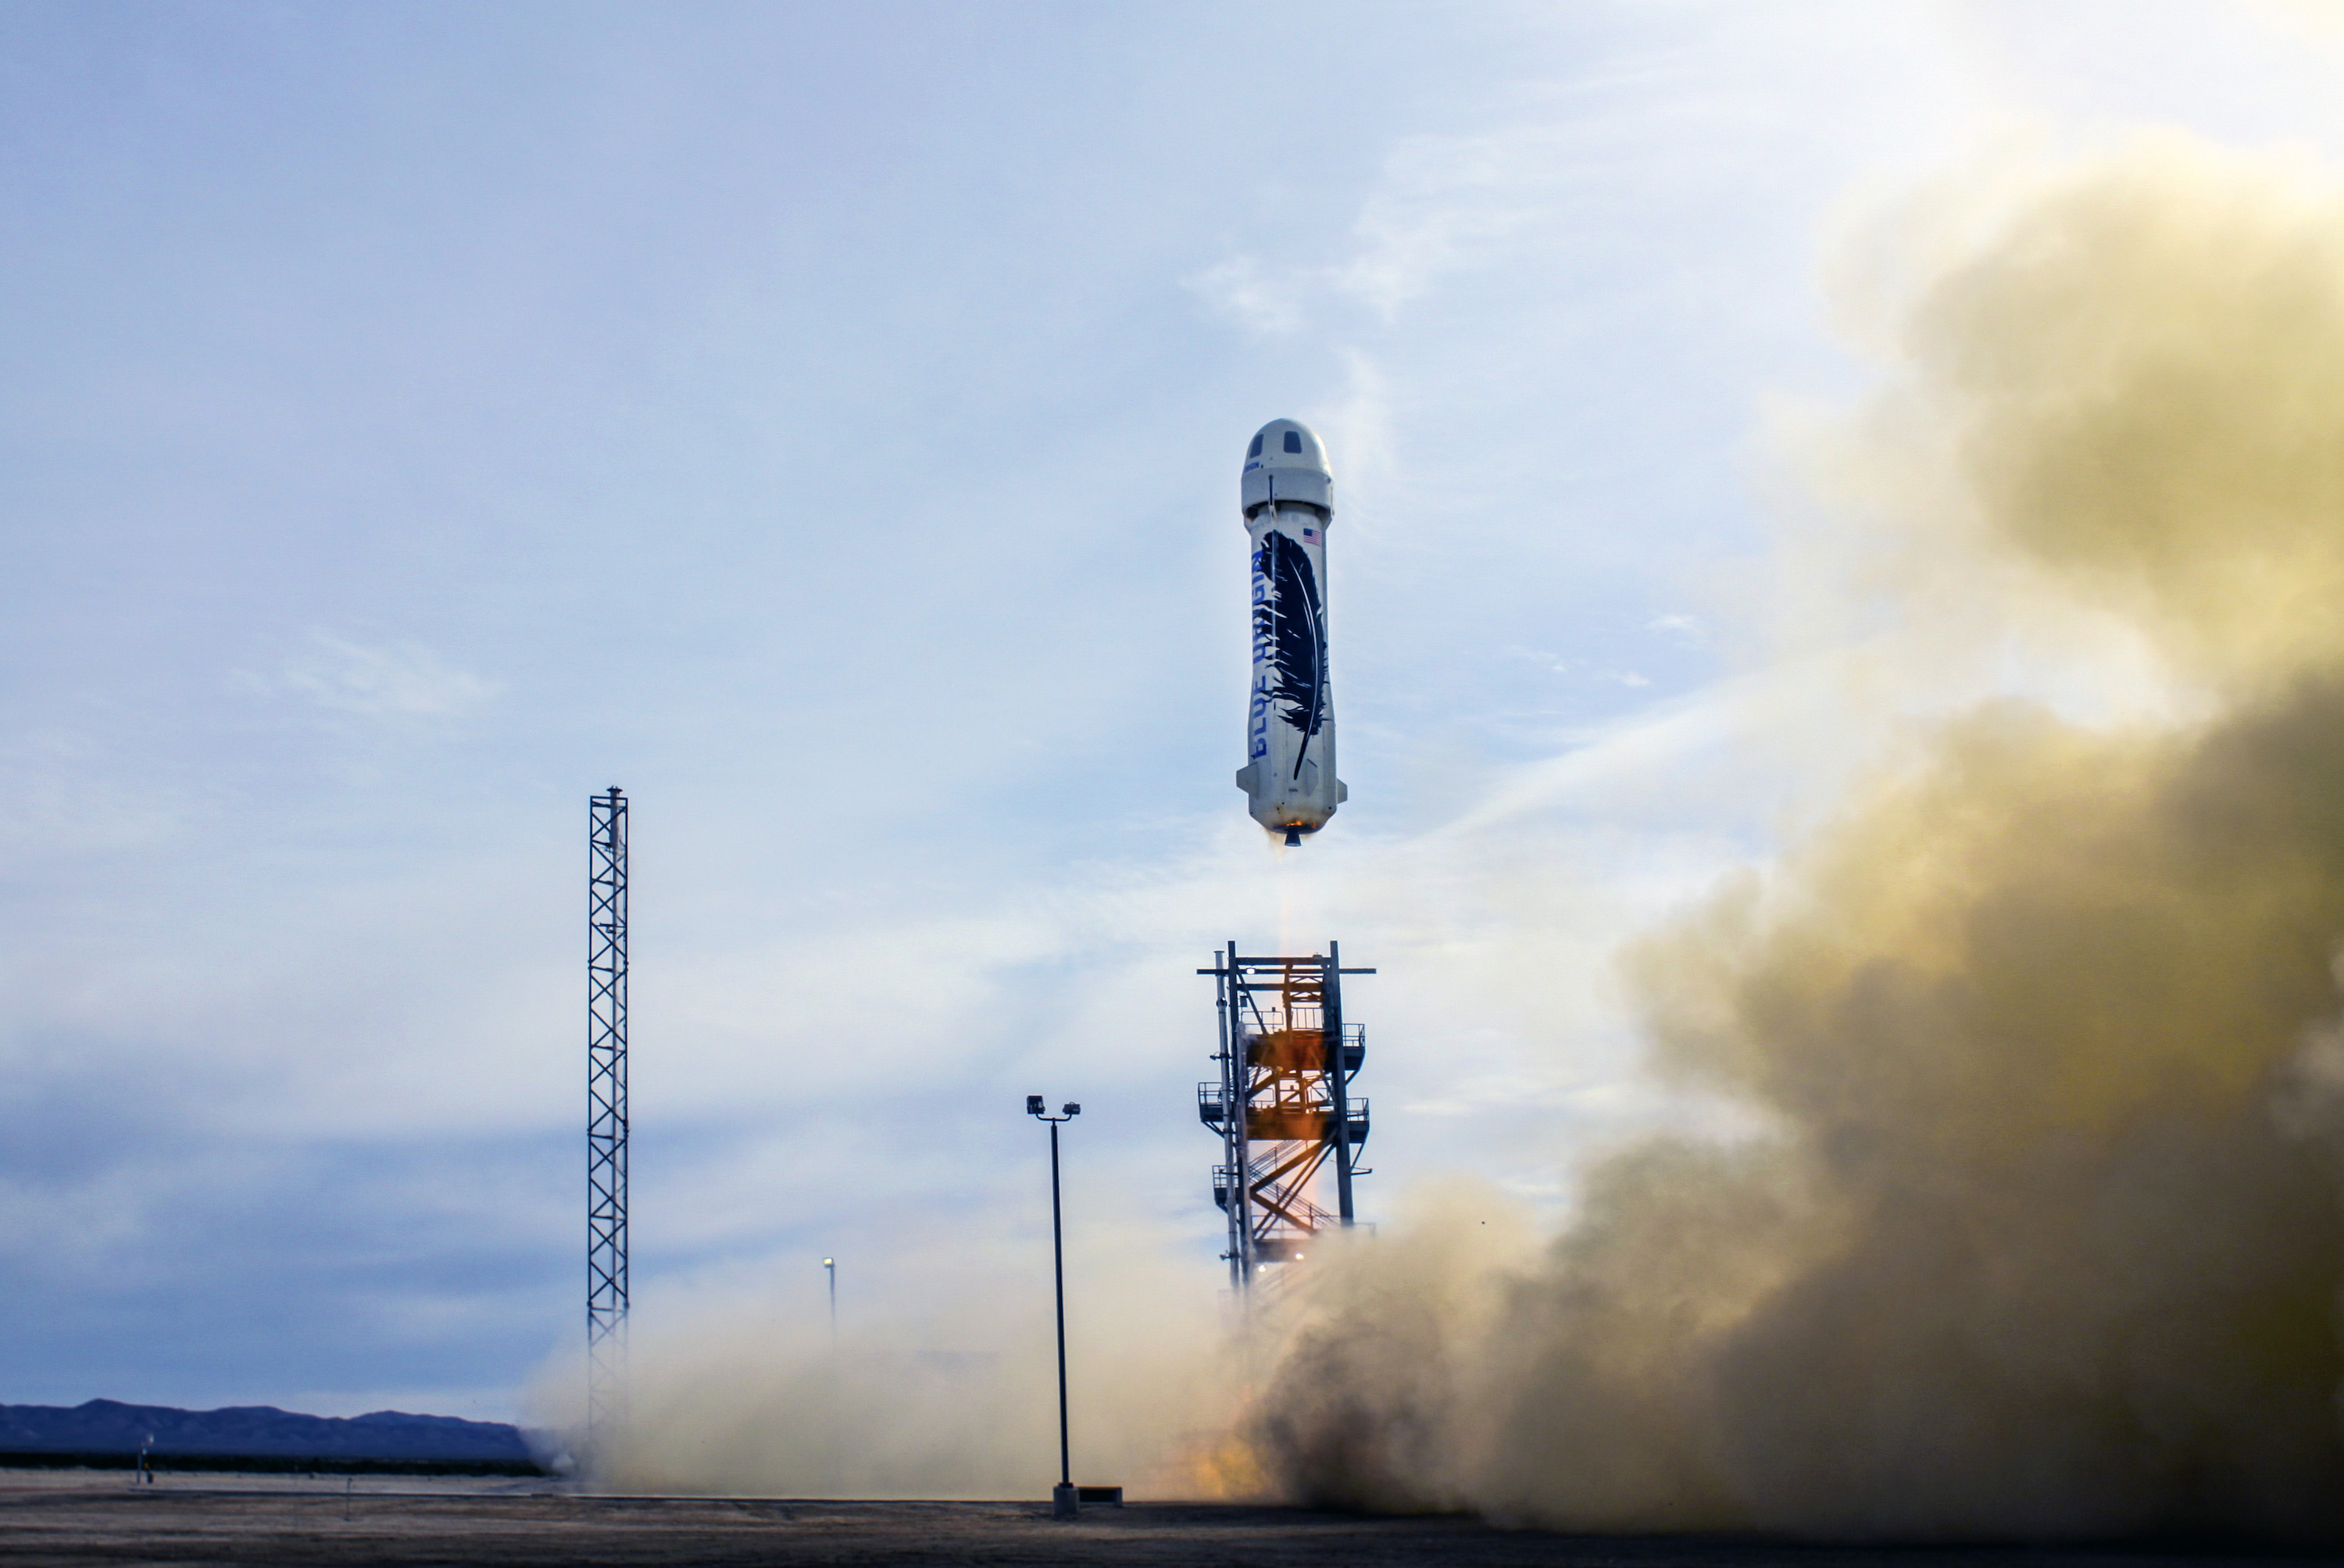 Jeff Bezos beats Elon Musk's SpaceX in the reusable rocket race